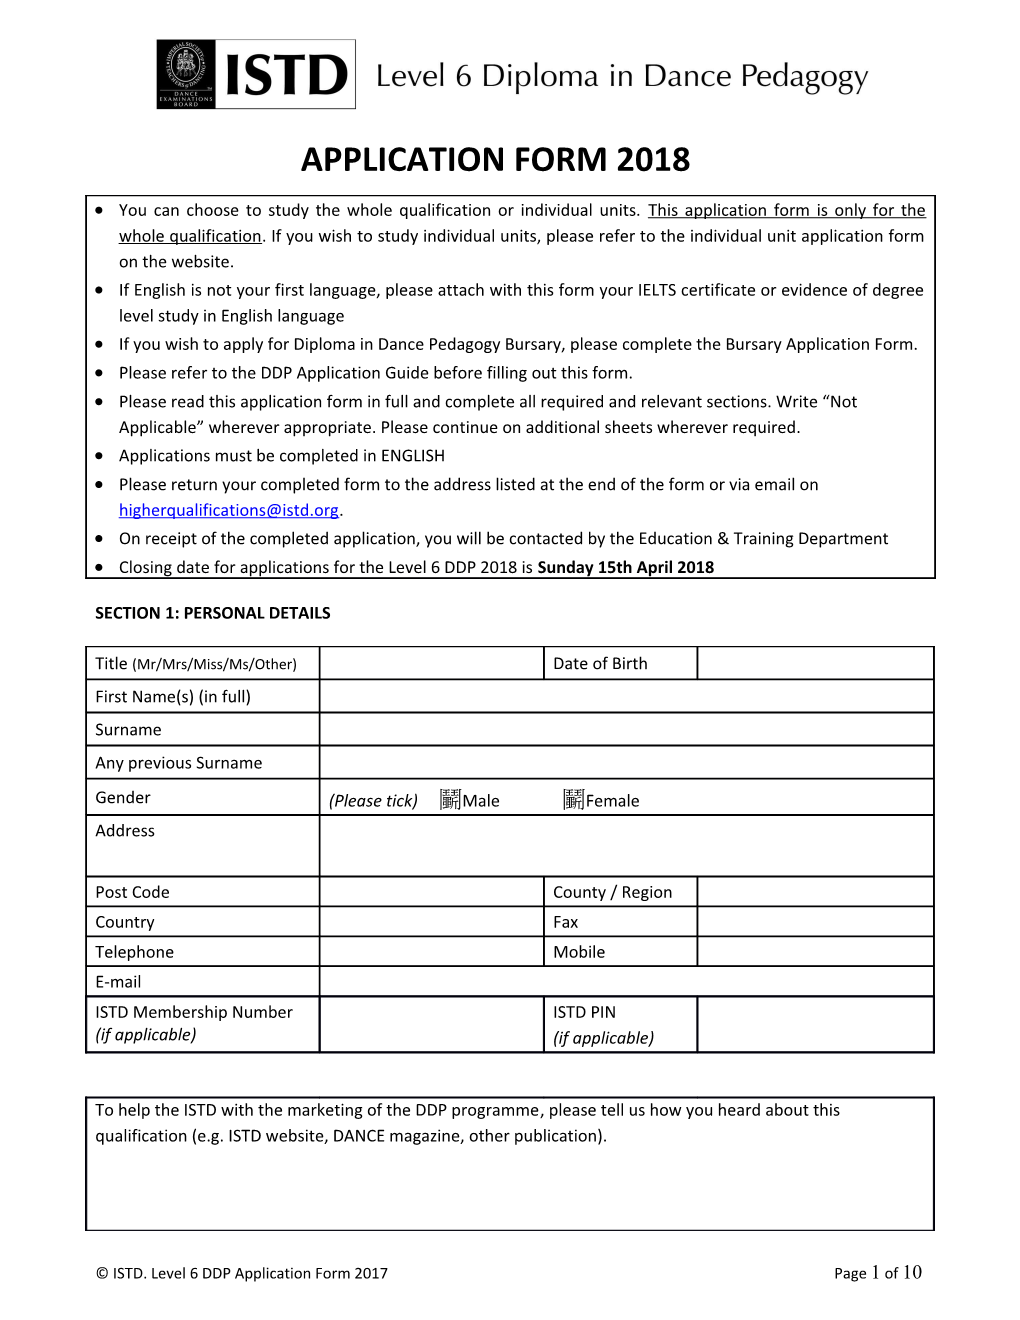 Application Form 2018